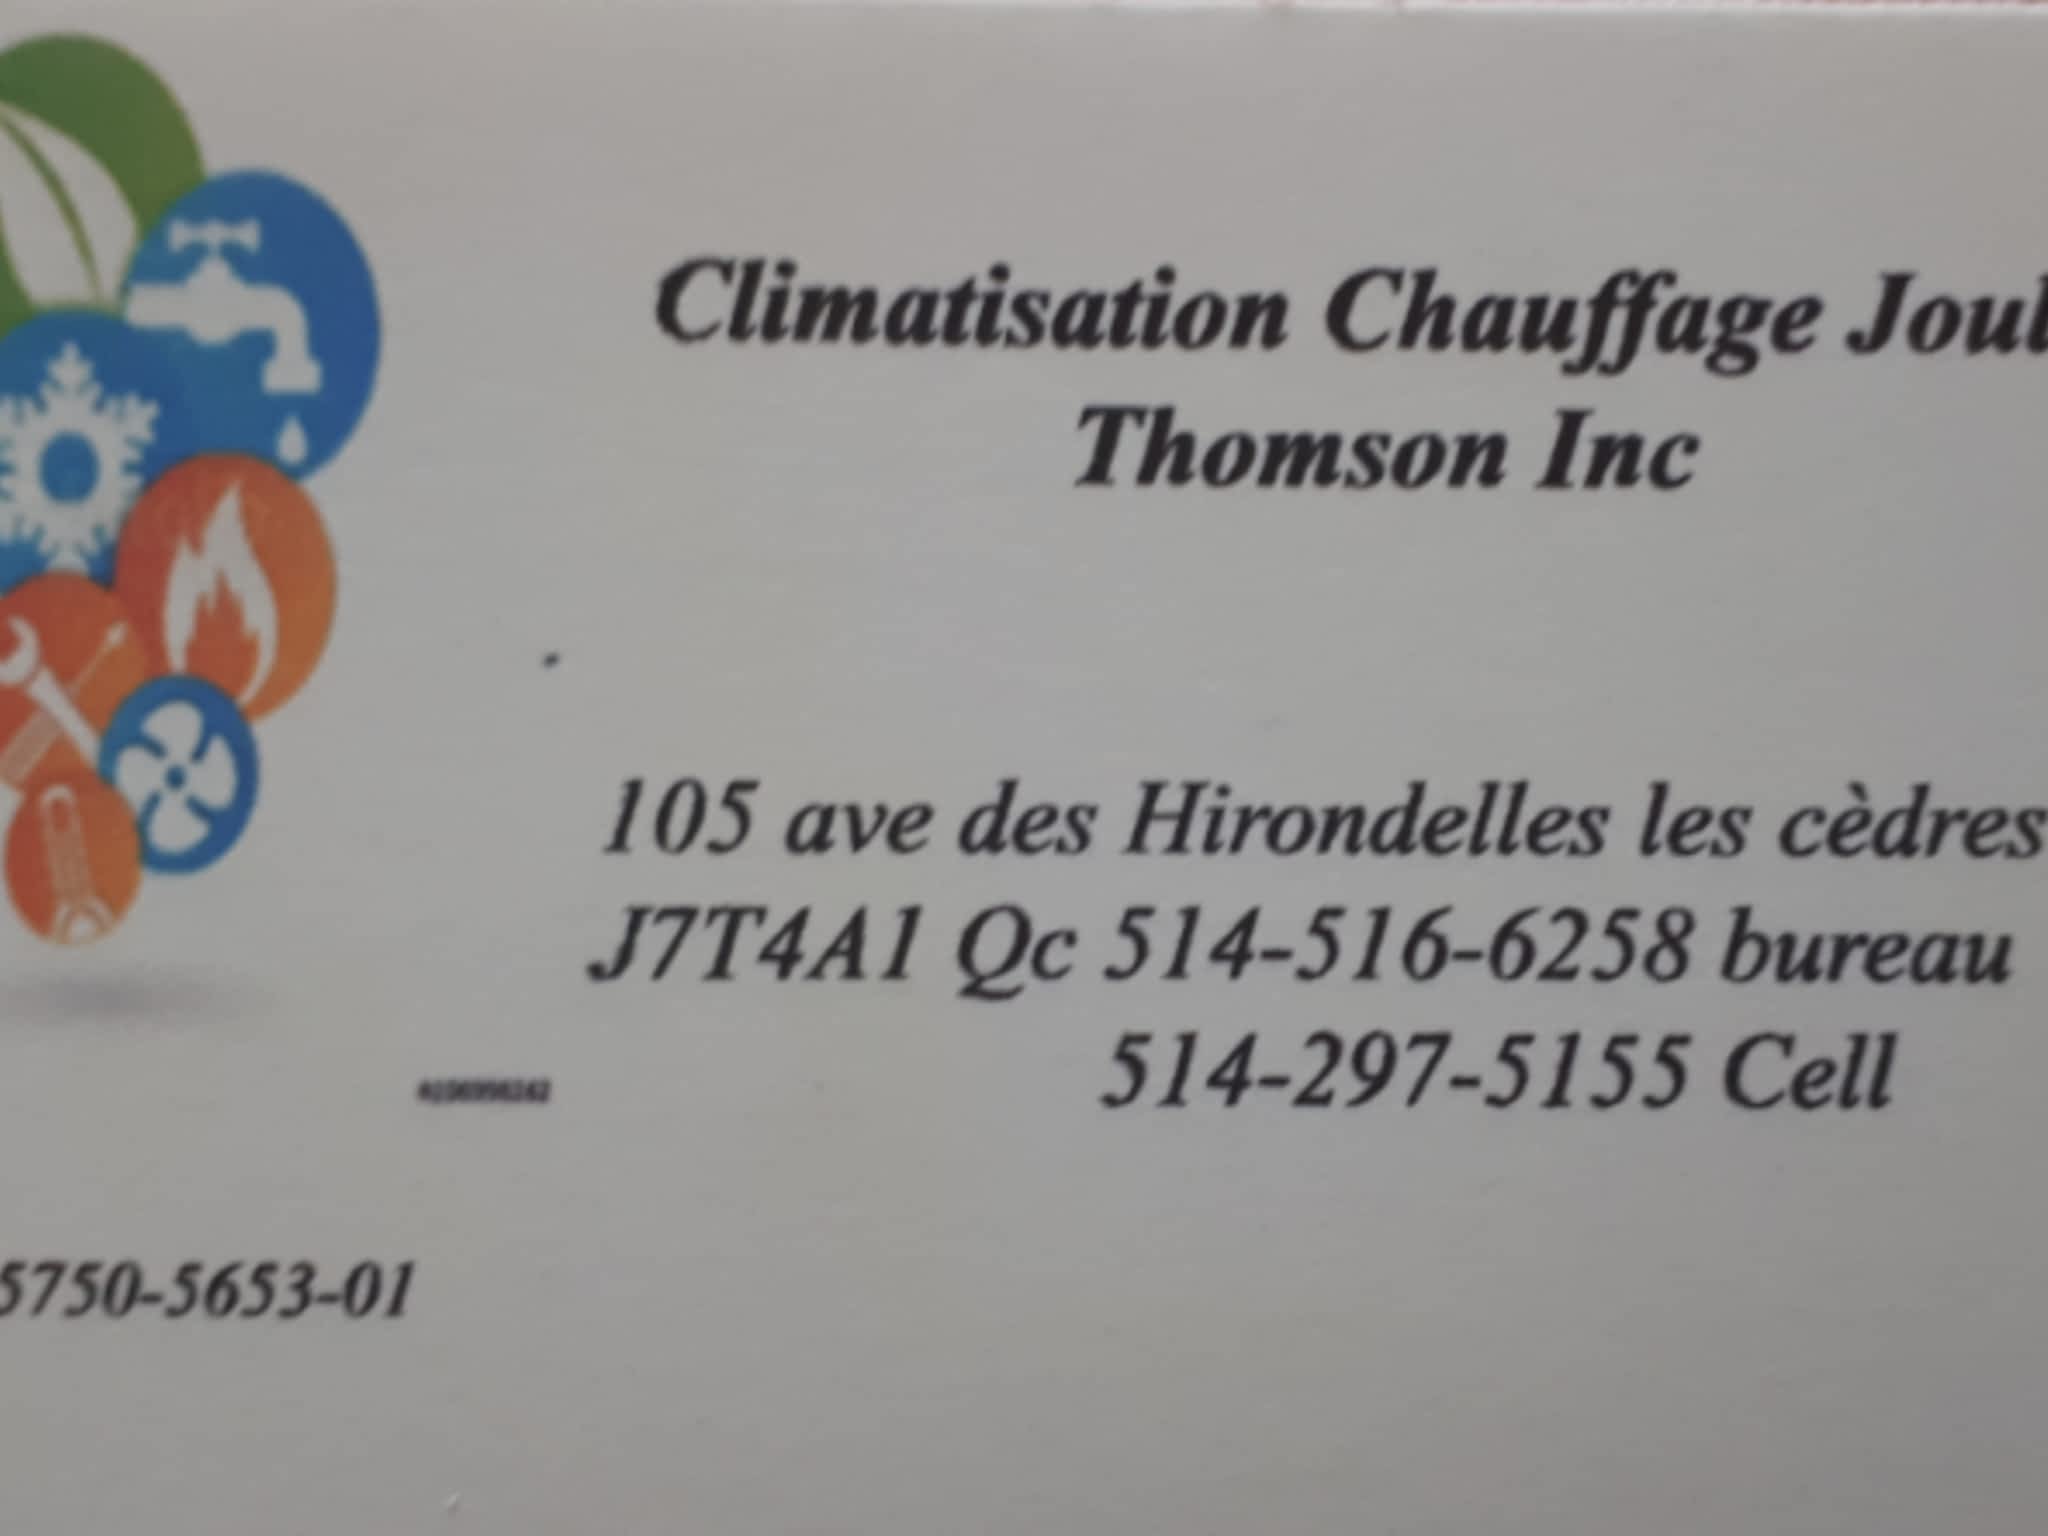 photo Climatisation Chauffage Joule Thomson Inc